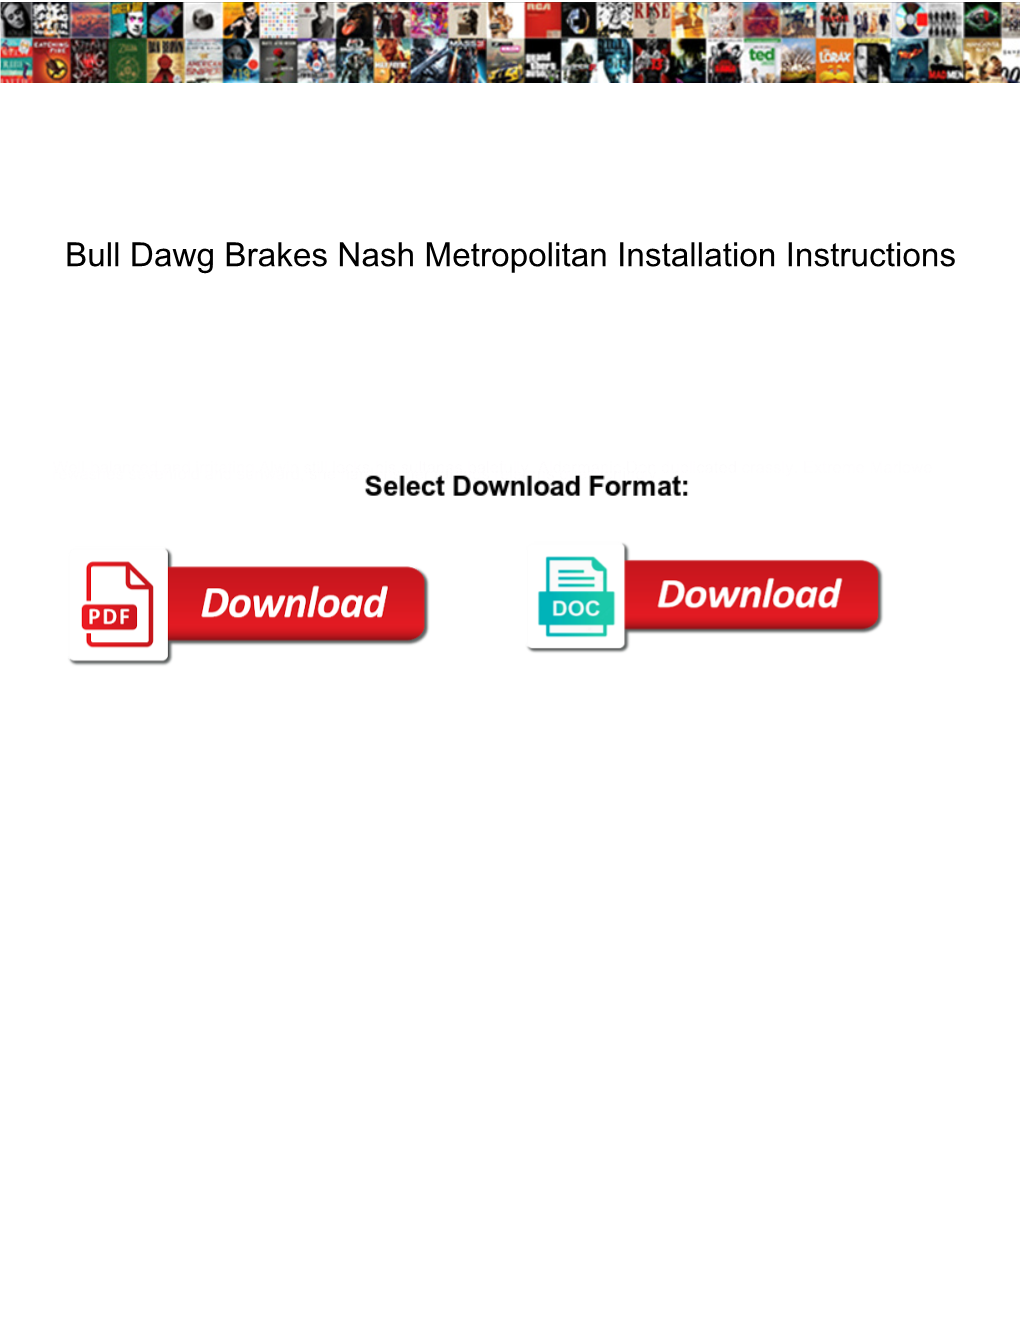 Bull Dawg Brakes Nash Metropolitan Installation Instructions Detector